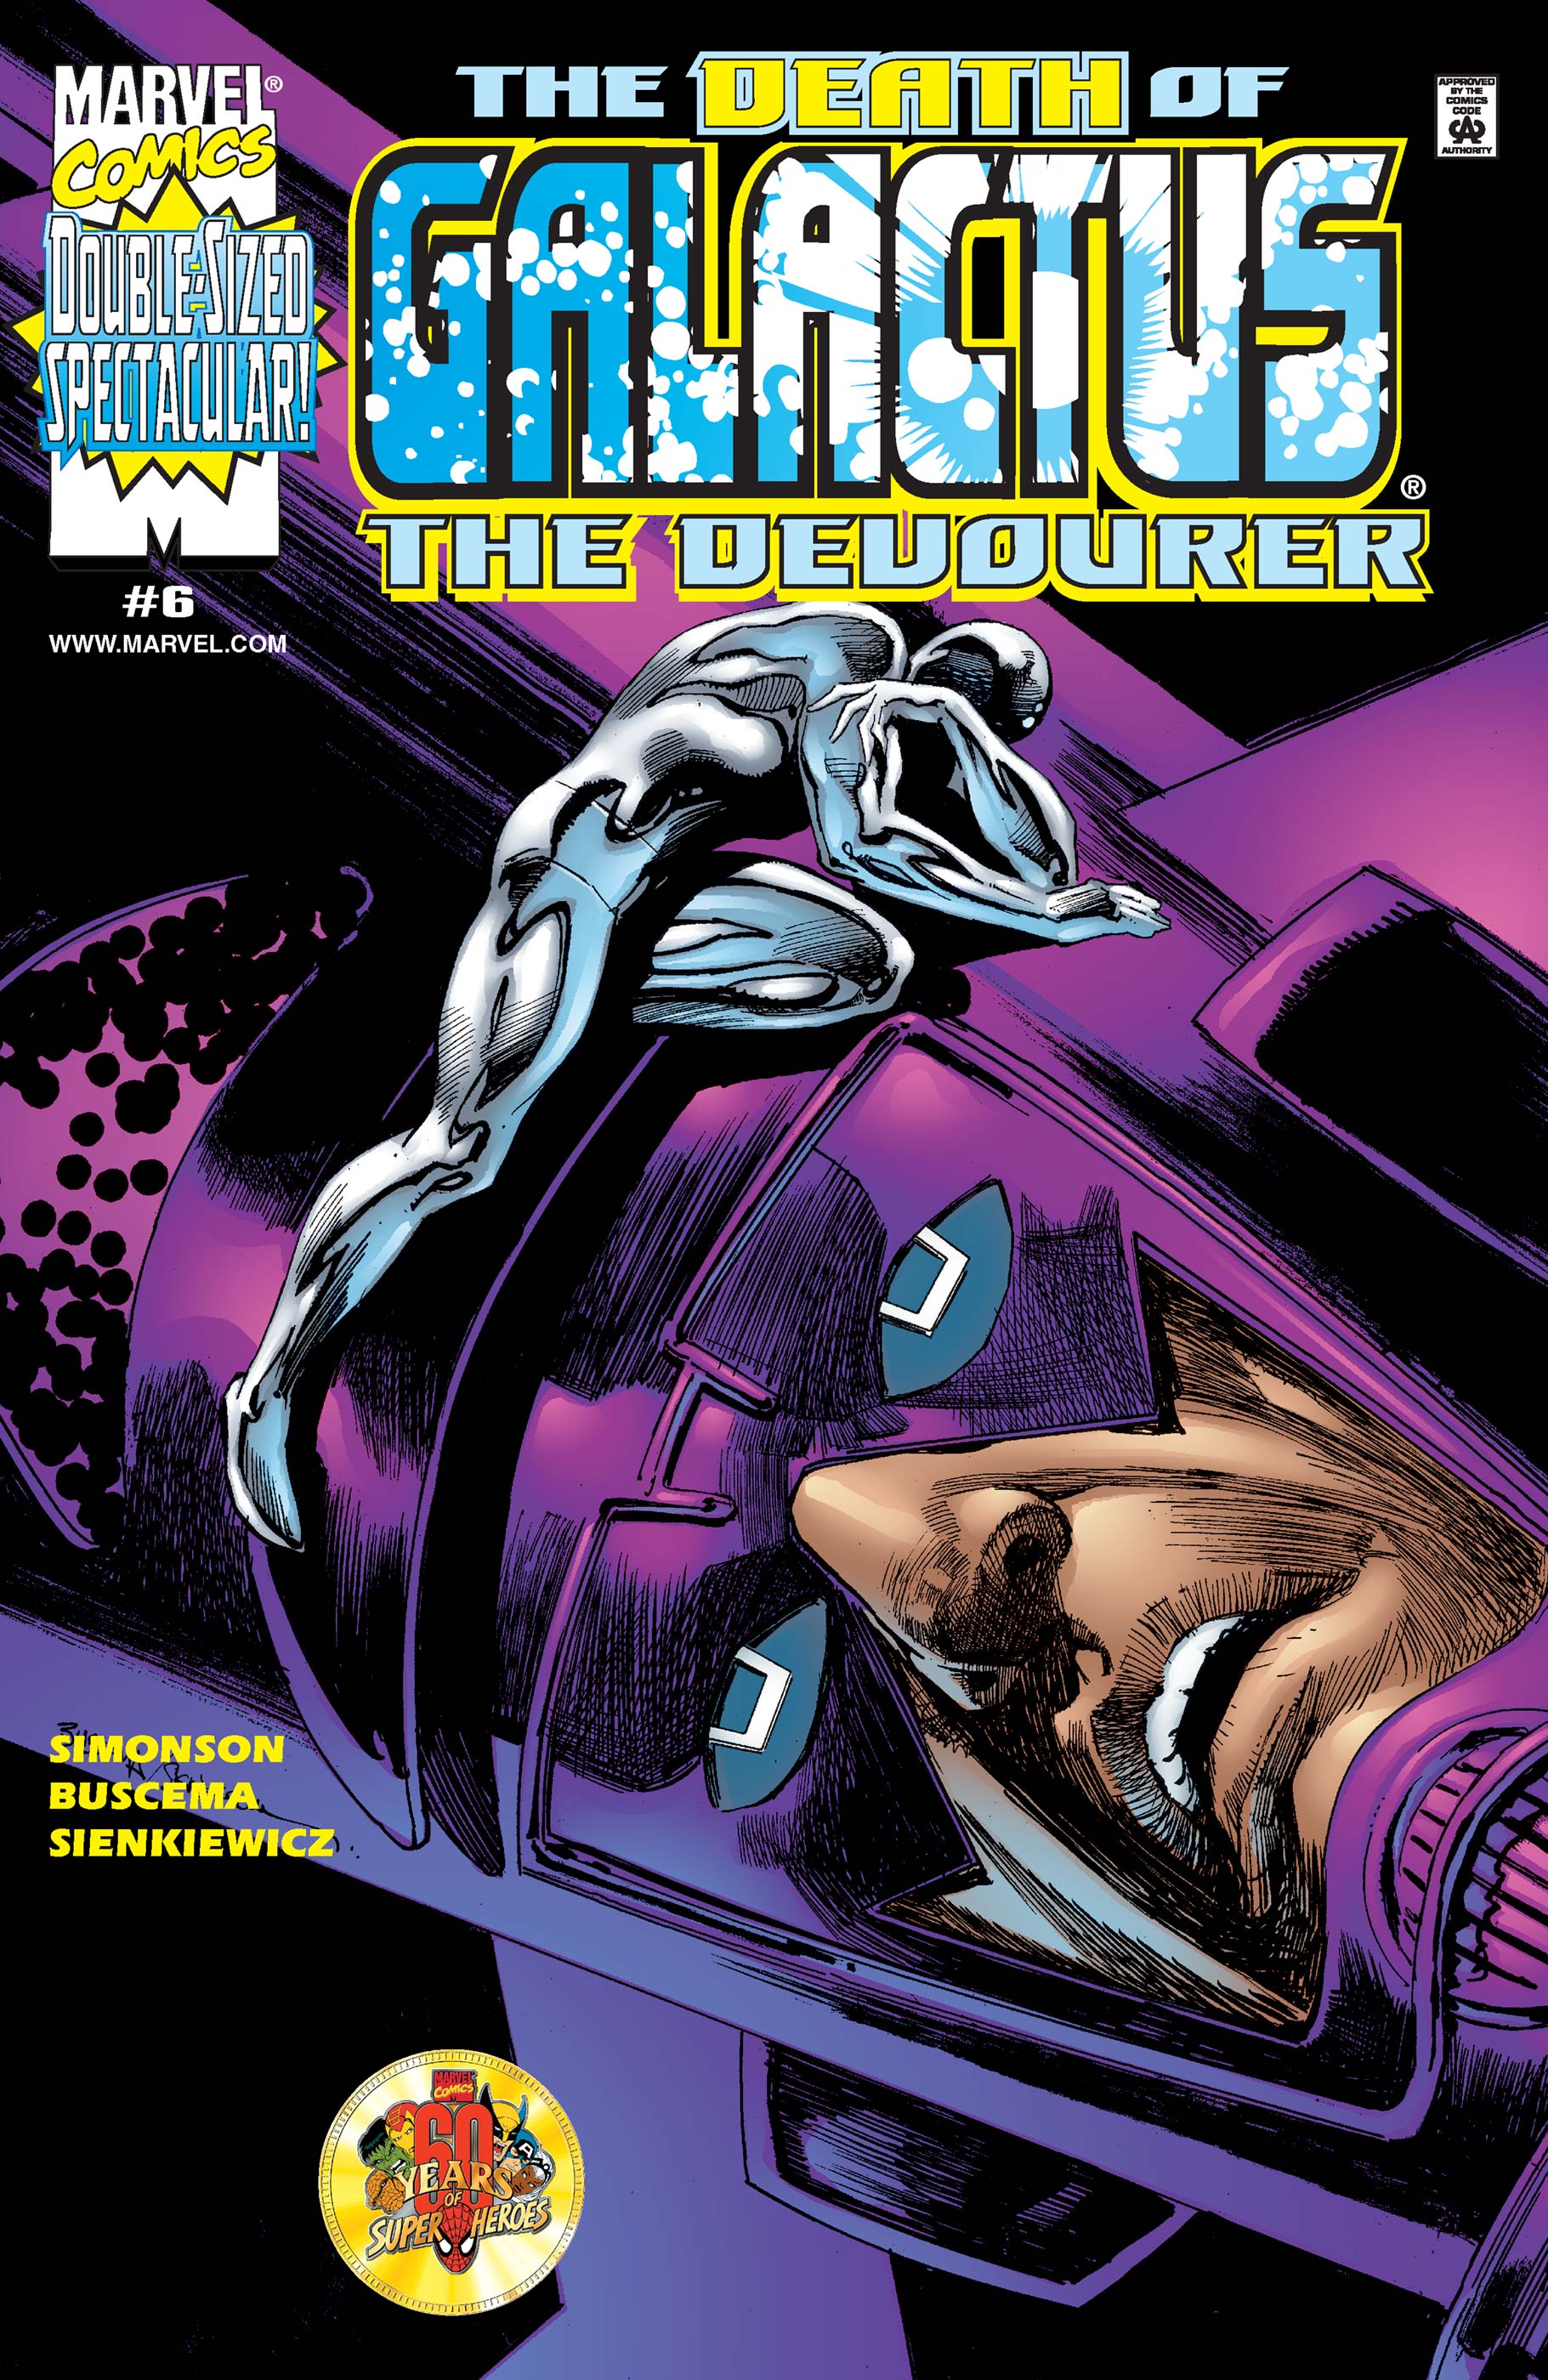 Galactus the Devourer (1999) #6